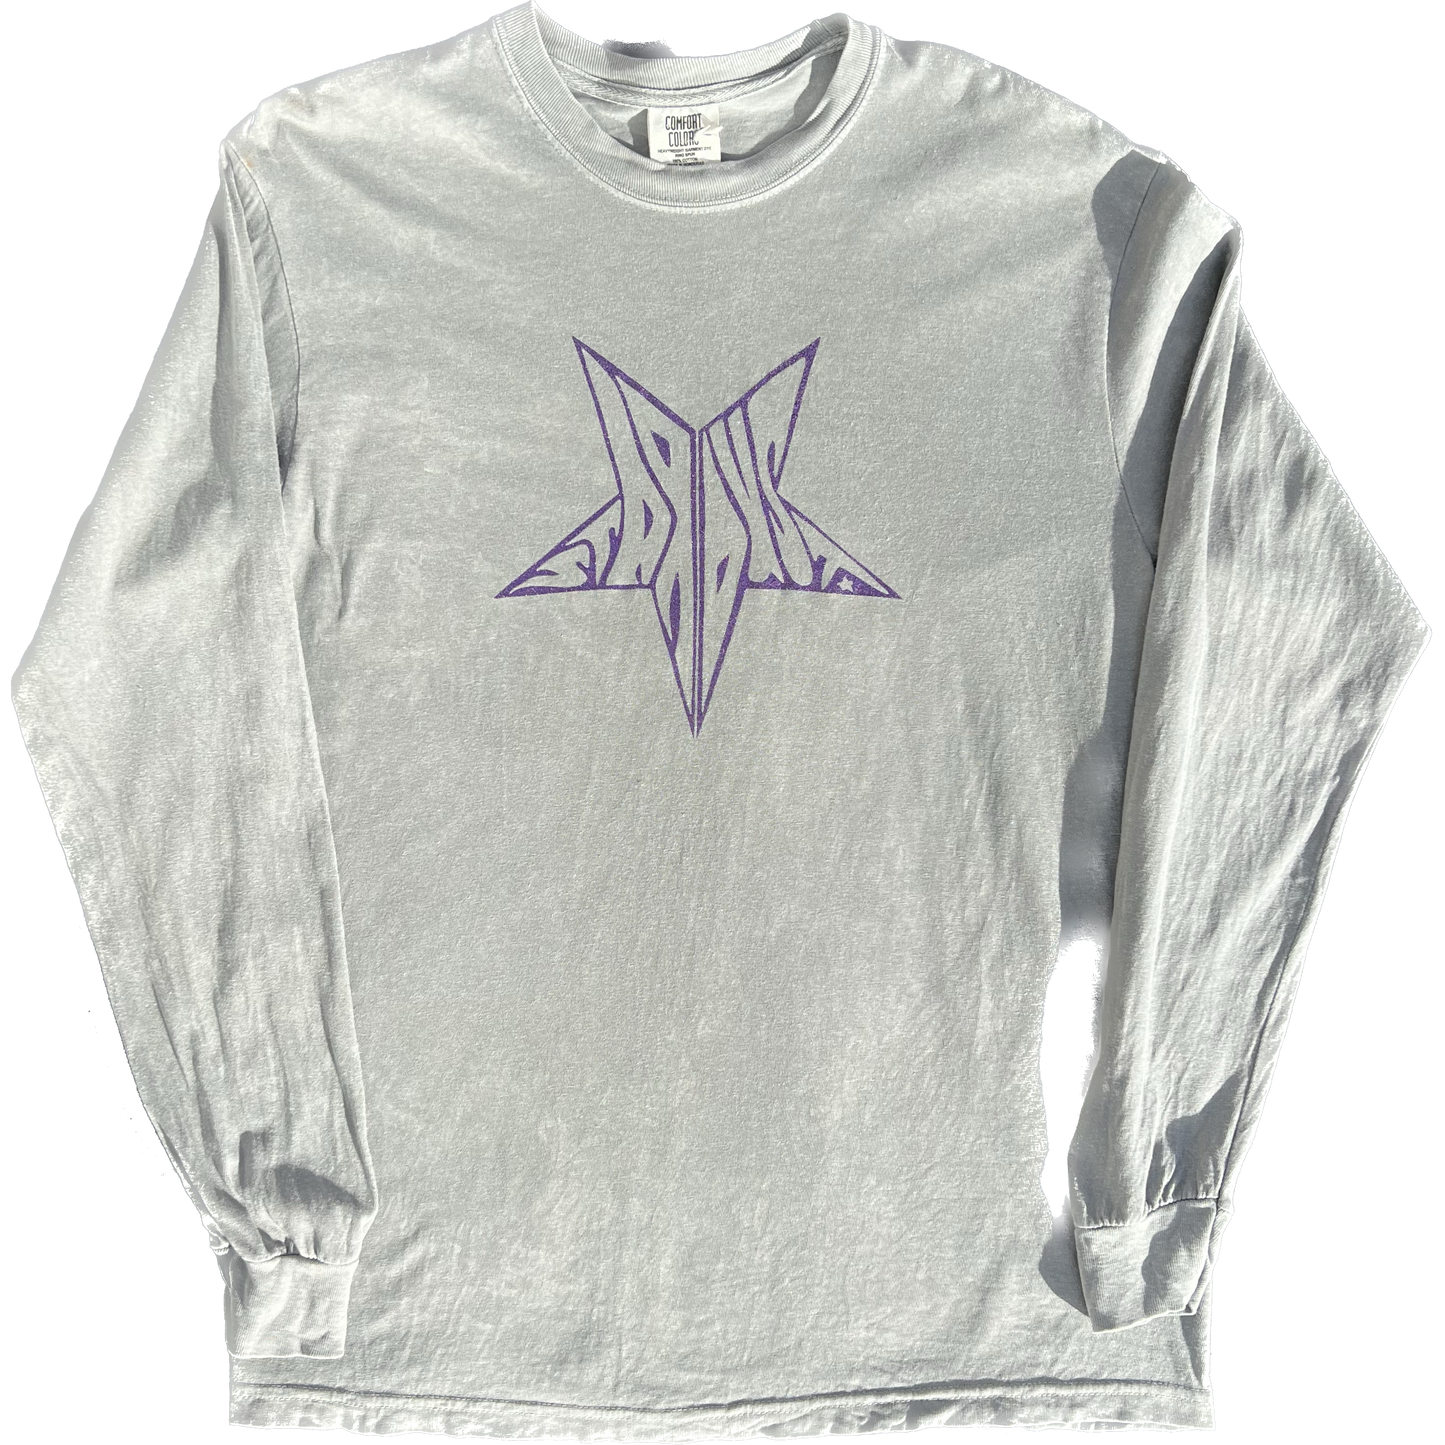 Stardust Skate Shop Purple Shimmer Star Long Sleeve Tee 026 - Assorted Colors - 6.1 oz